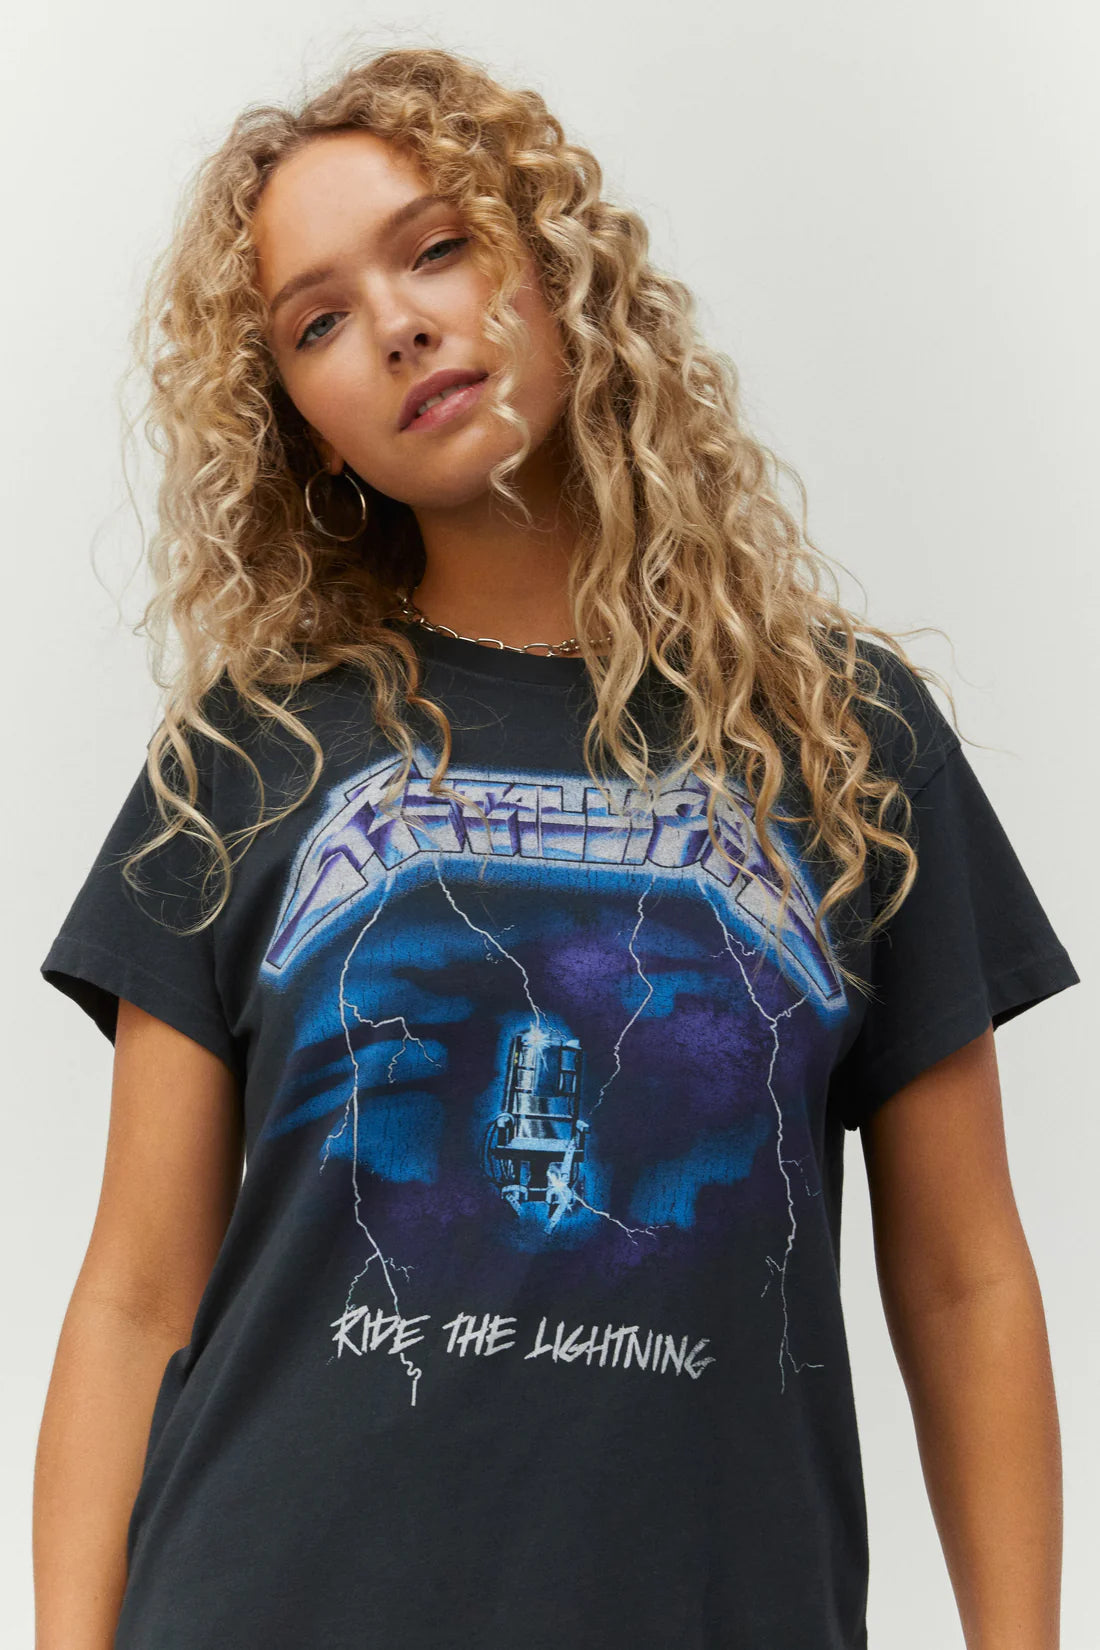 Metallica Ride The Lightning Cropped Long-Sleeve Girls T-Shirt